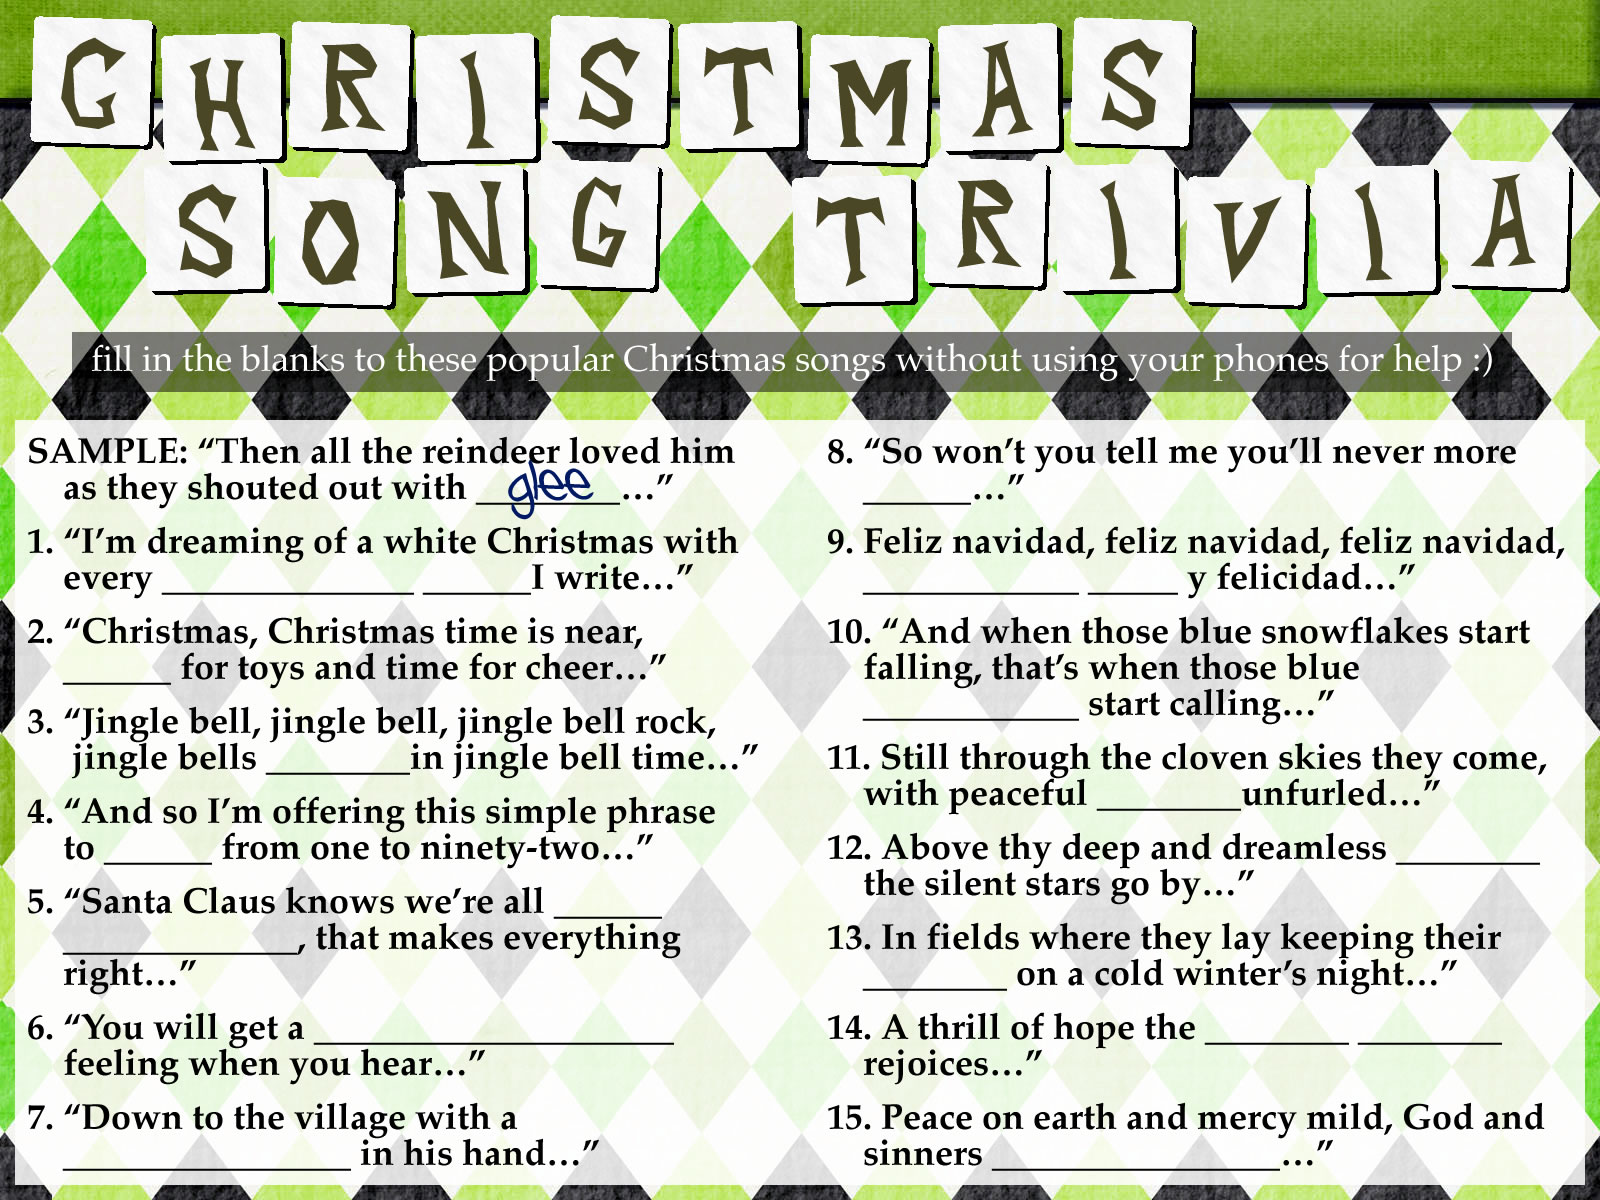 FREEBIE Christmas Song Trivia